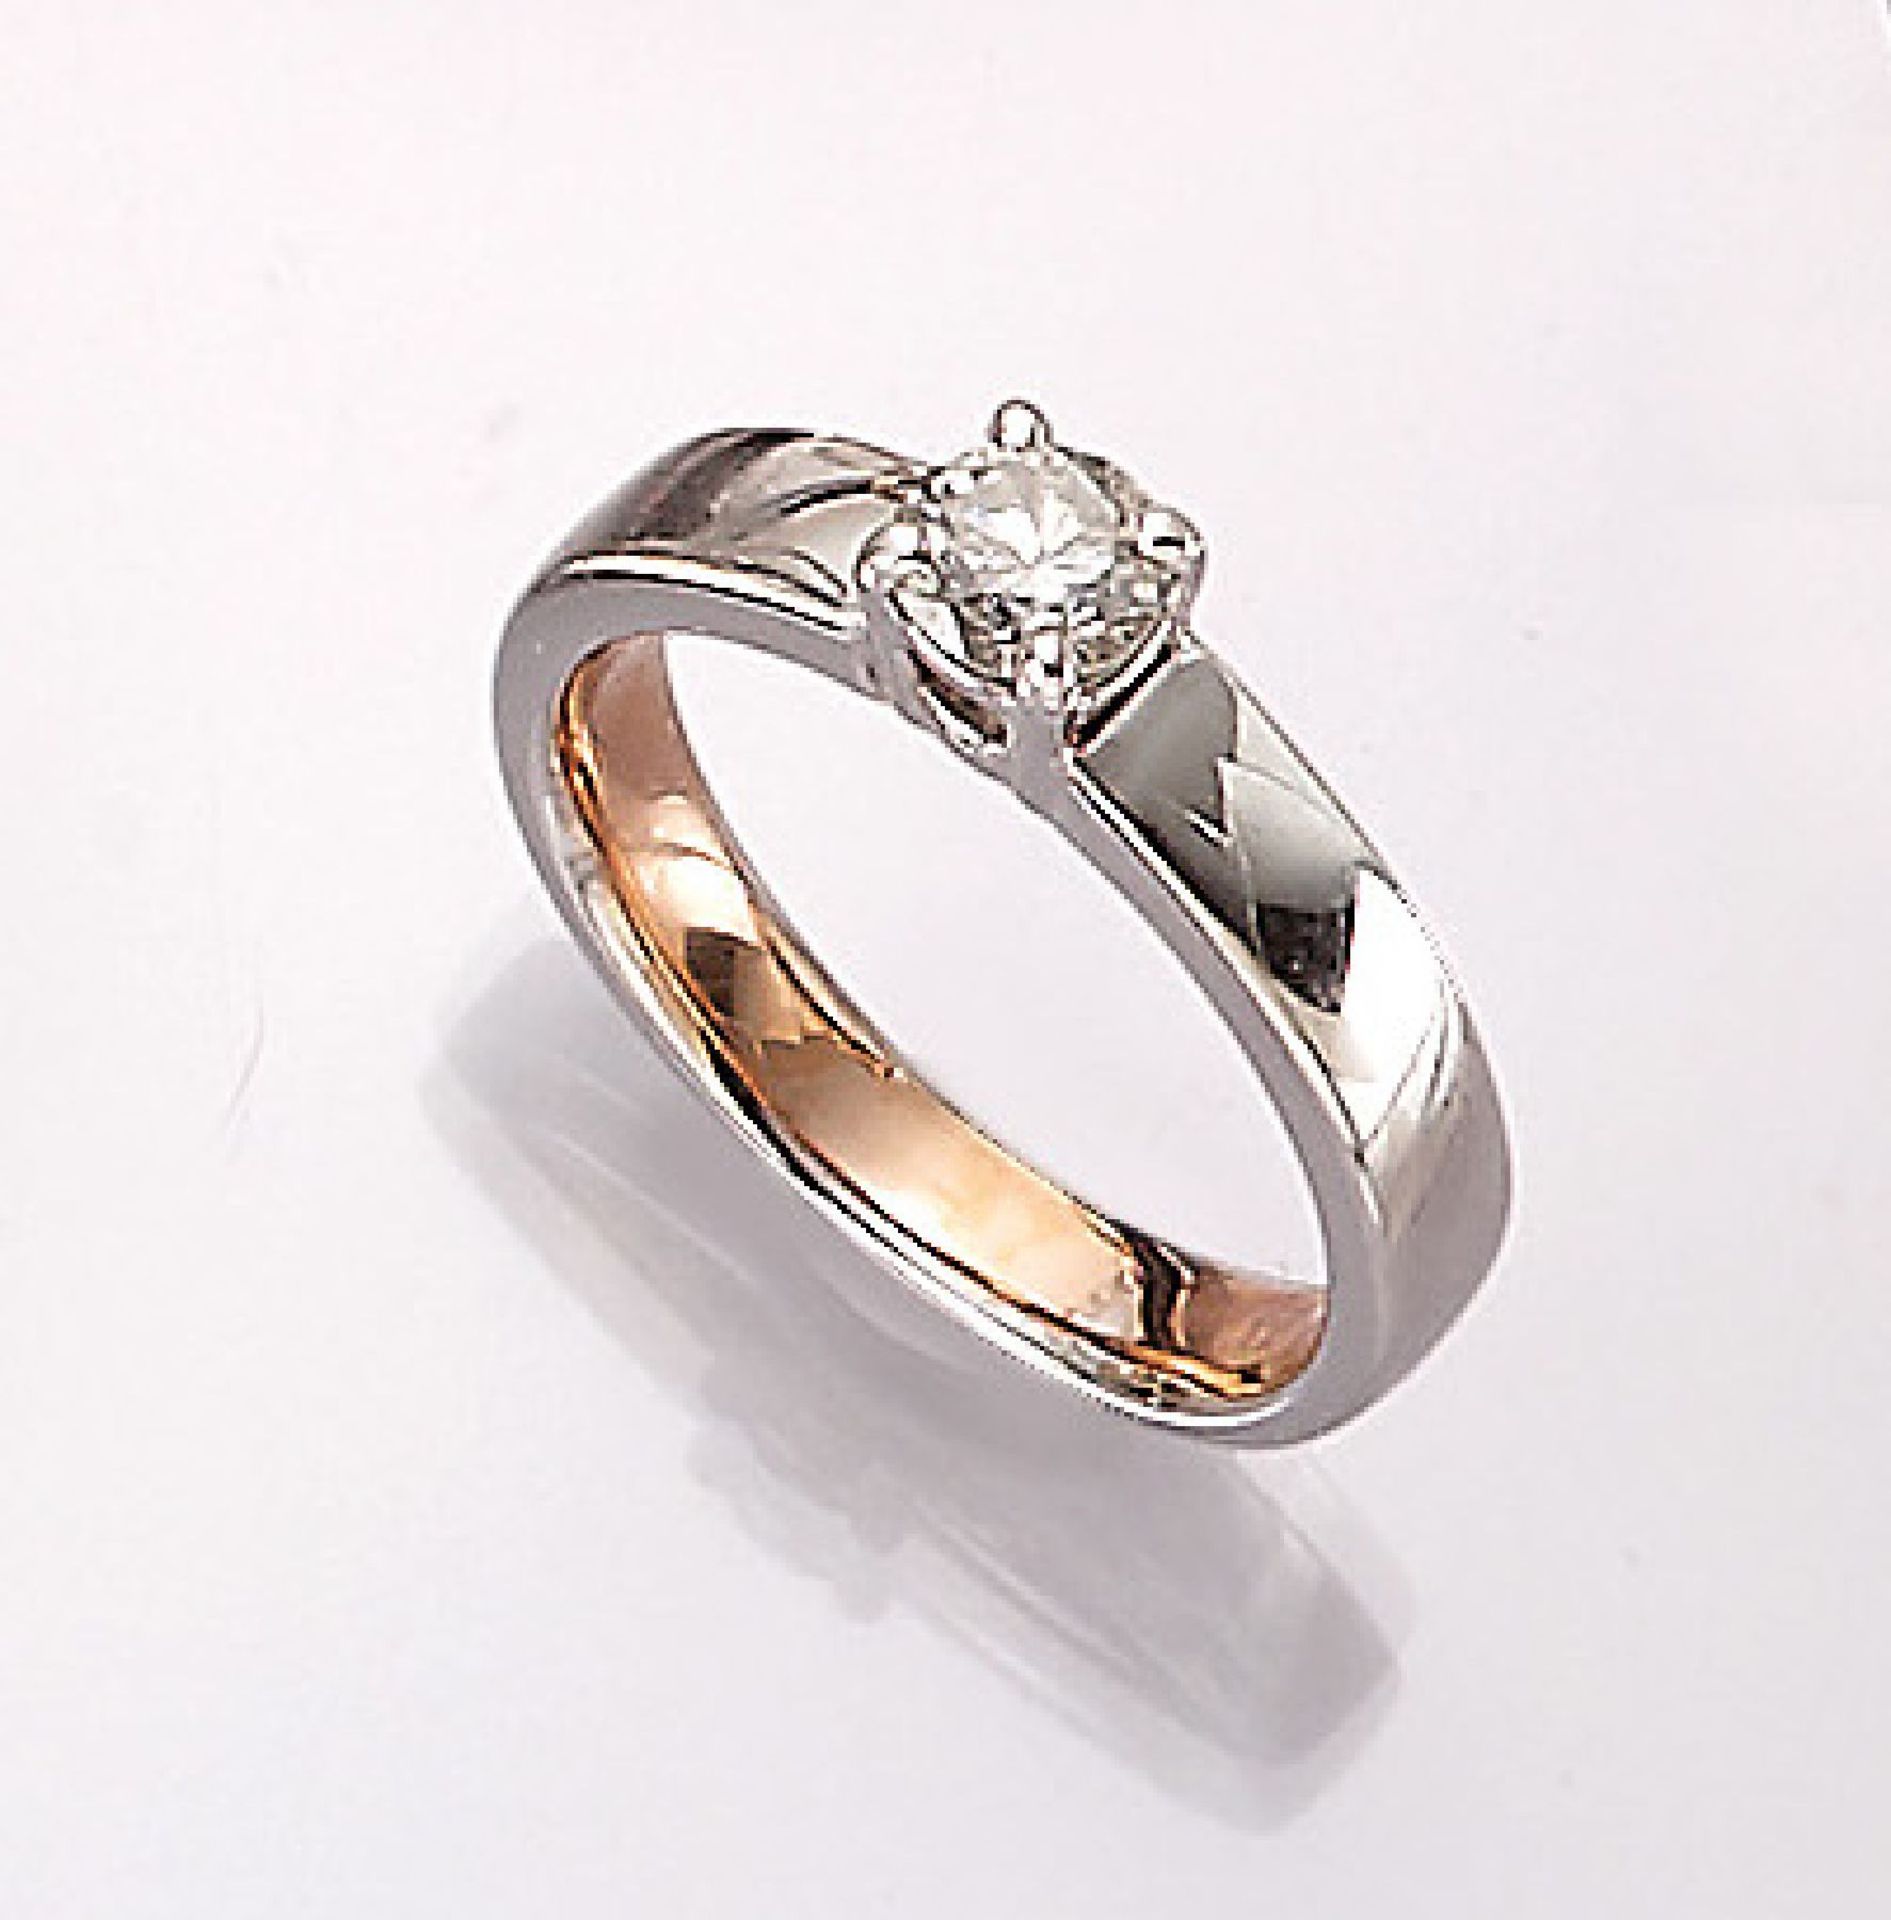 18 kt Gold Ring mit Brillant, WG 750/000, Brillant ca. 0.51 ct Weiß/si-p1, RW 5318 kt gold ring with